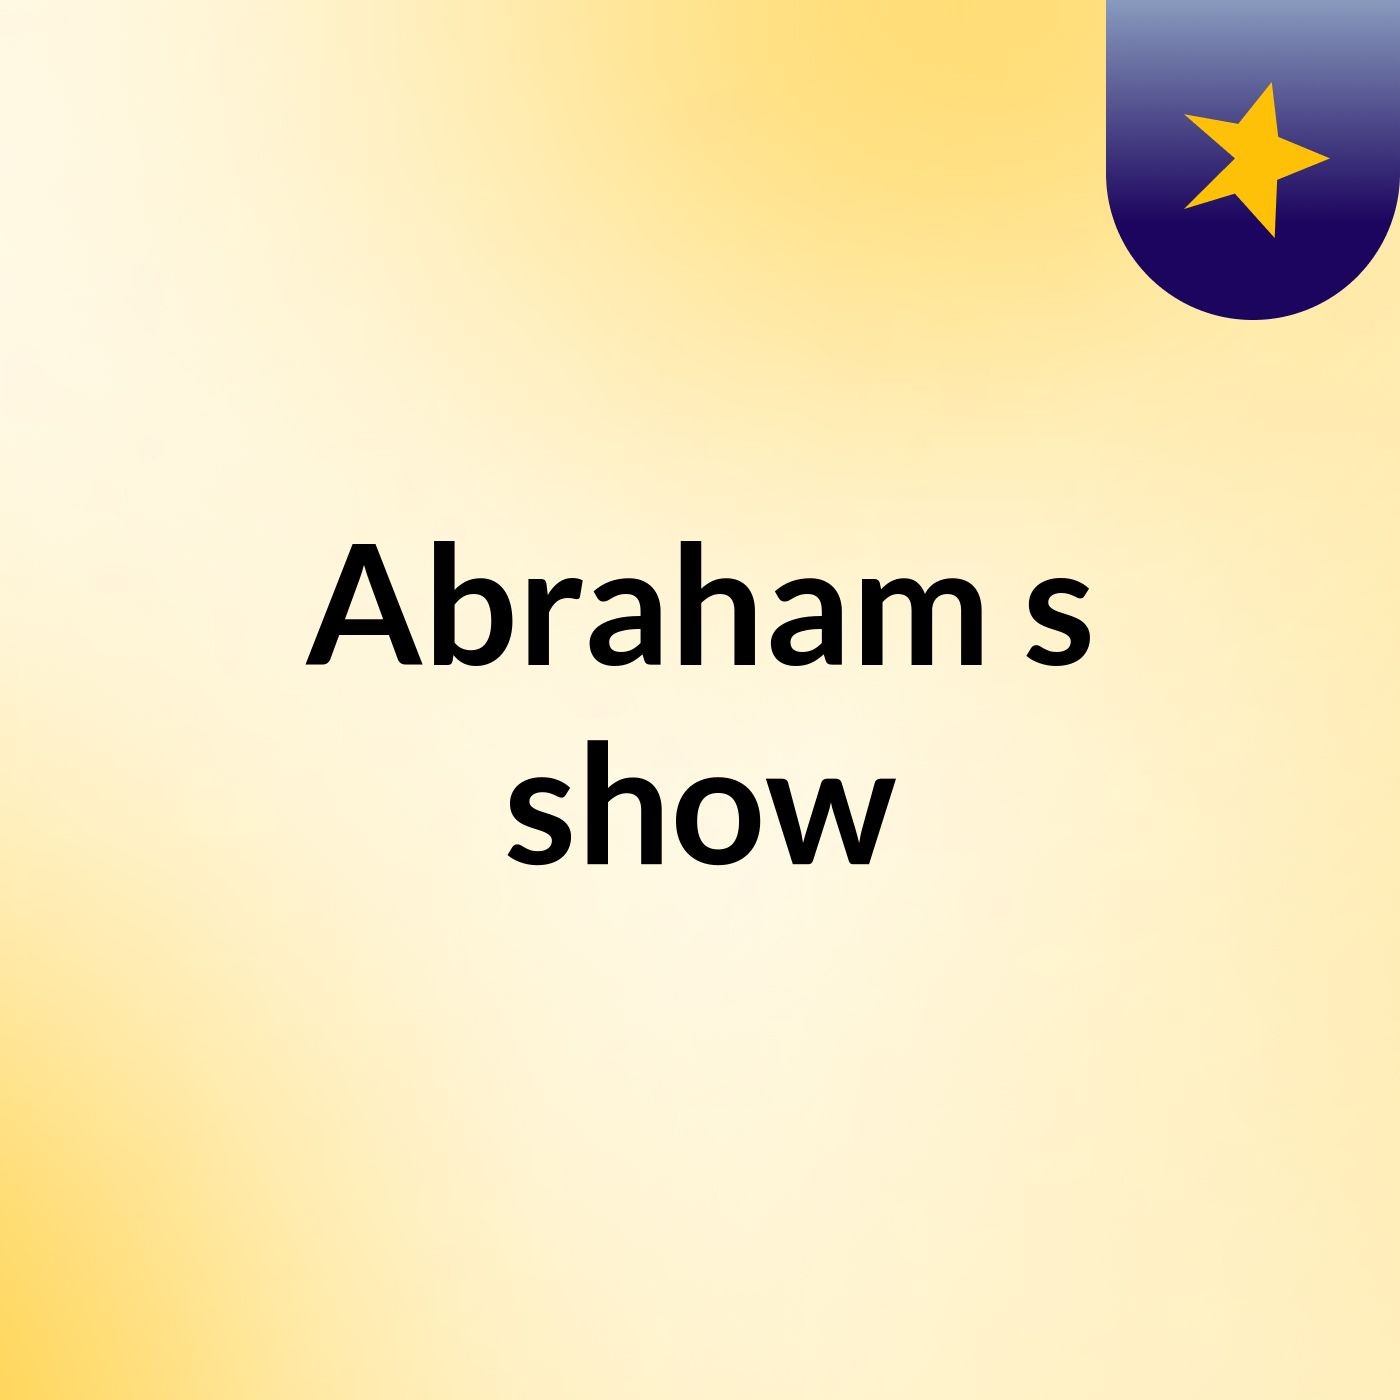 Abraham's show